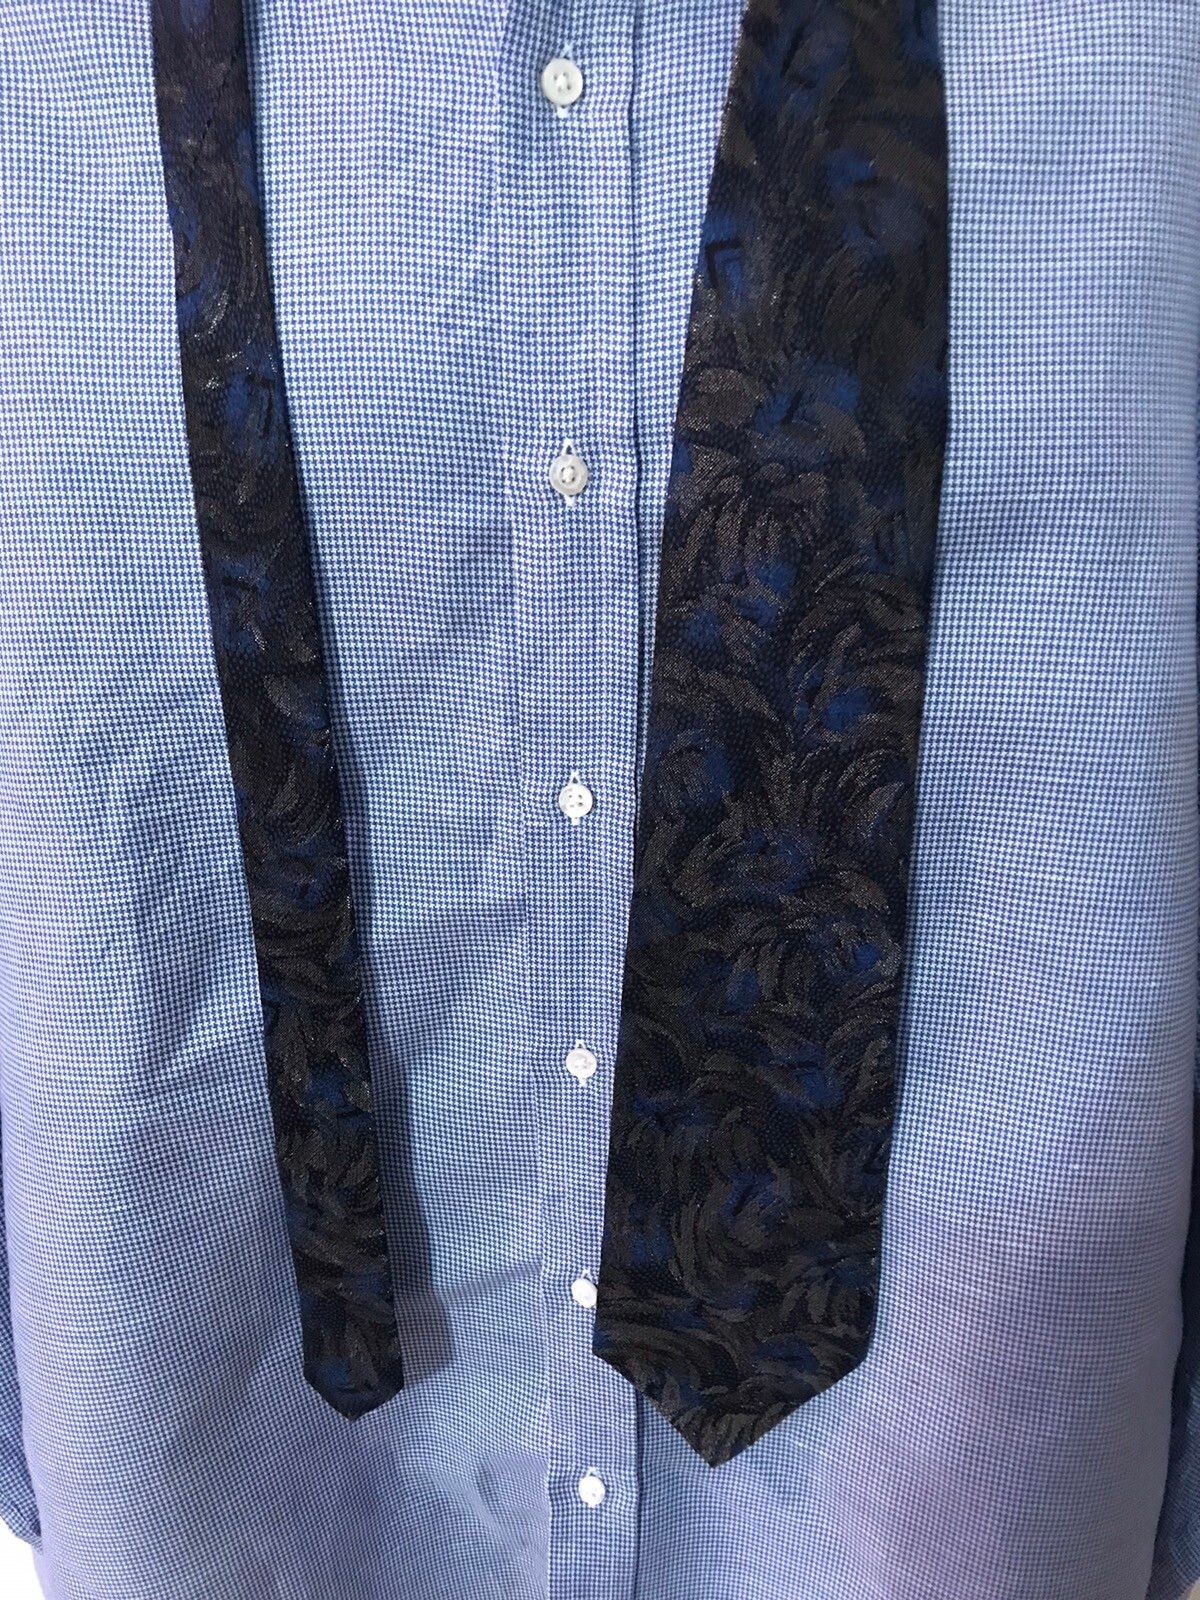 Fendi Floral shimmer silk tie (Royal,Grey, Black) Size ONE SIZE - 1 Preview